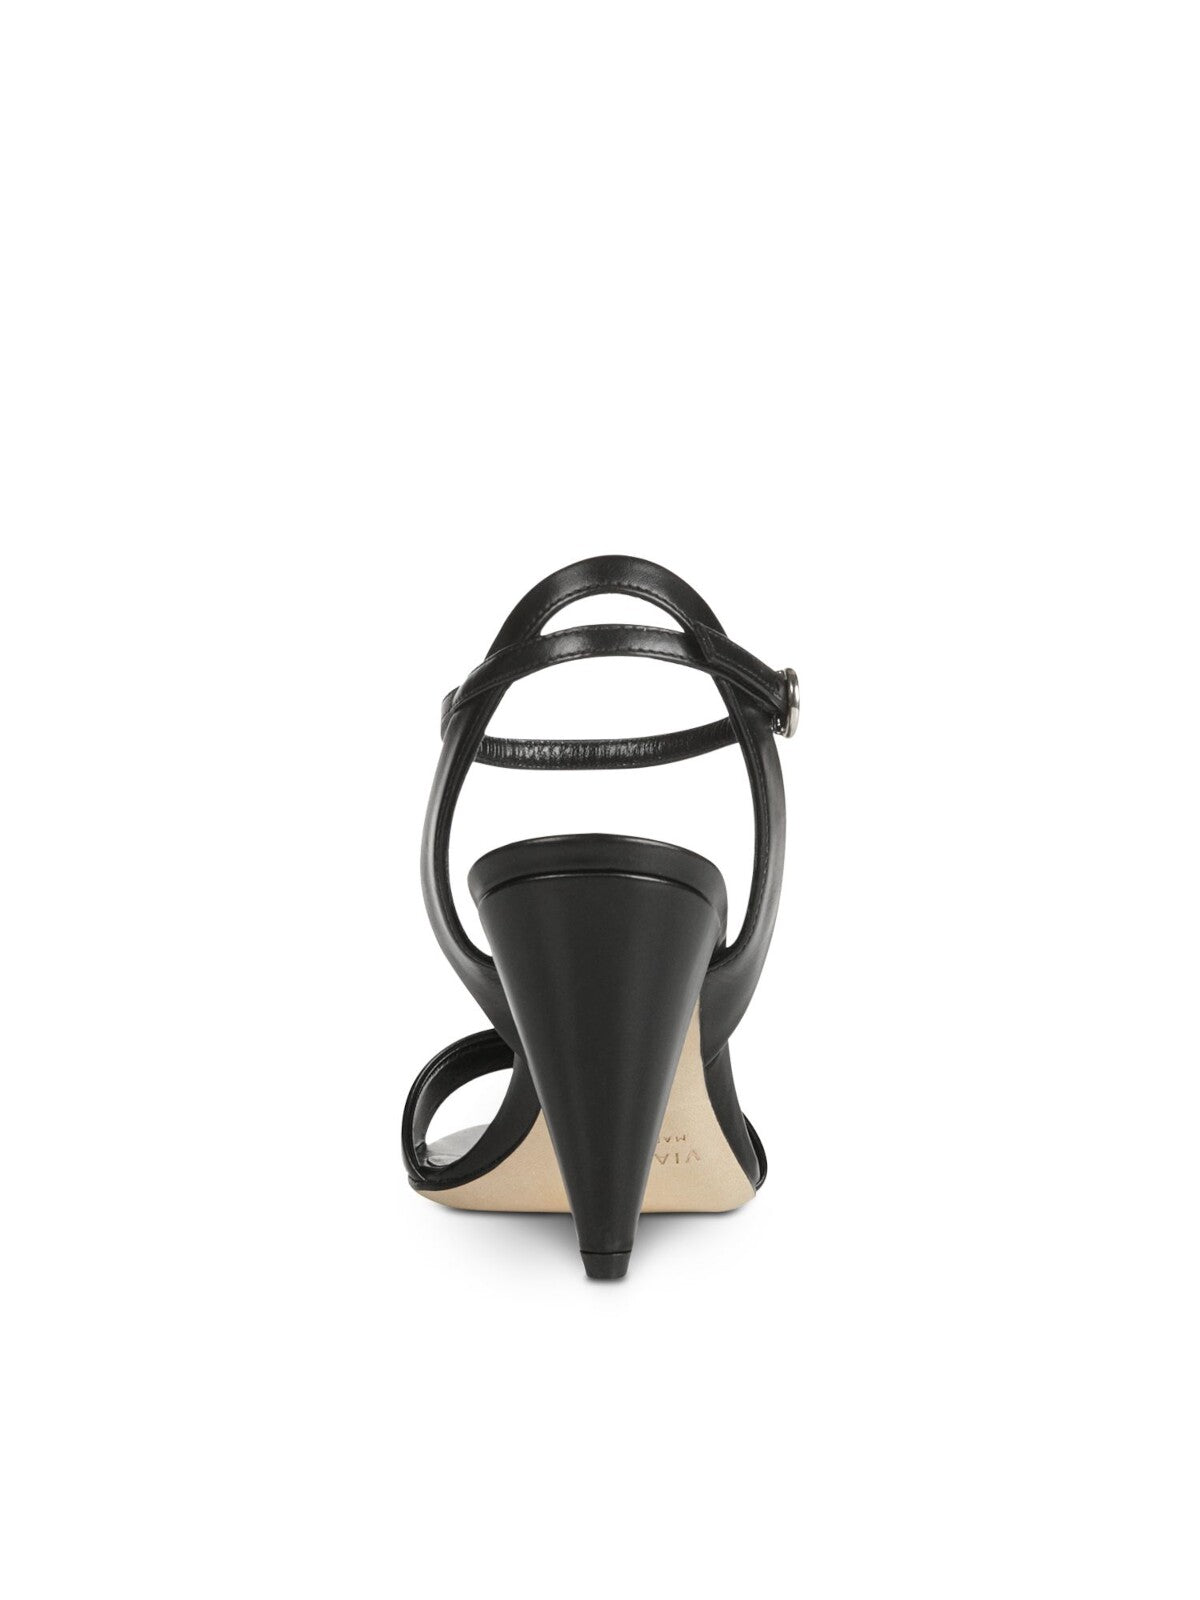 VIA SPIGA Womens Black Adjustable Strap Cushioned Ria Square Toe Cone Heel Buckle Leather Dress Slingback Sandal 9.5 M